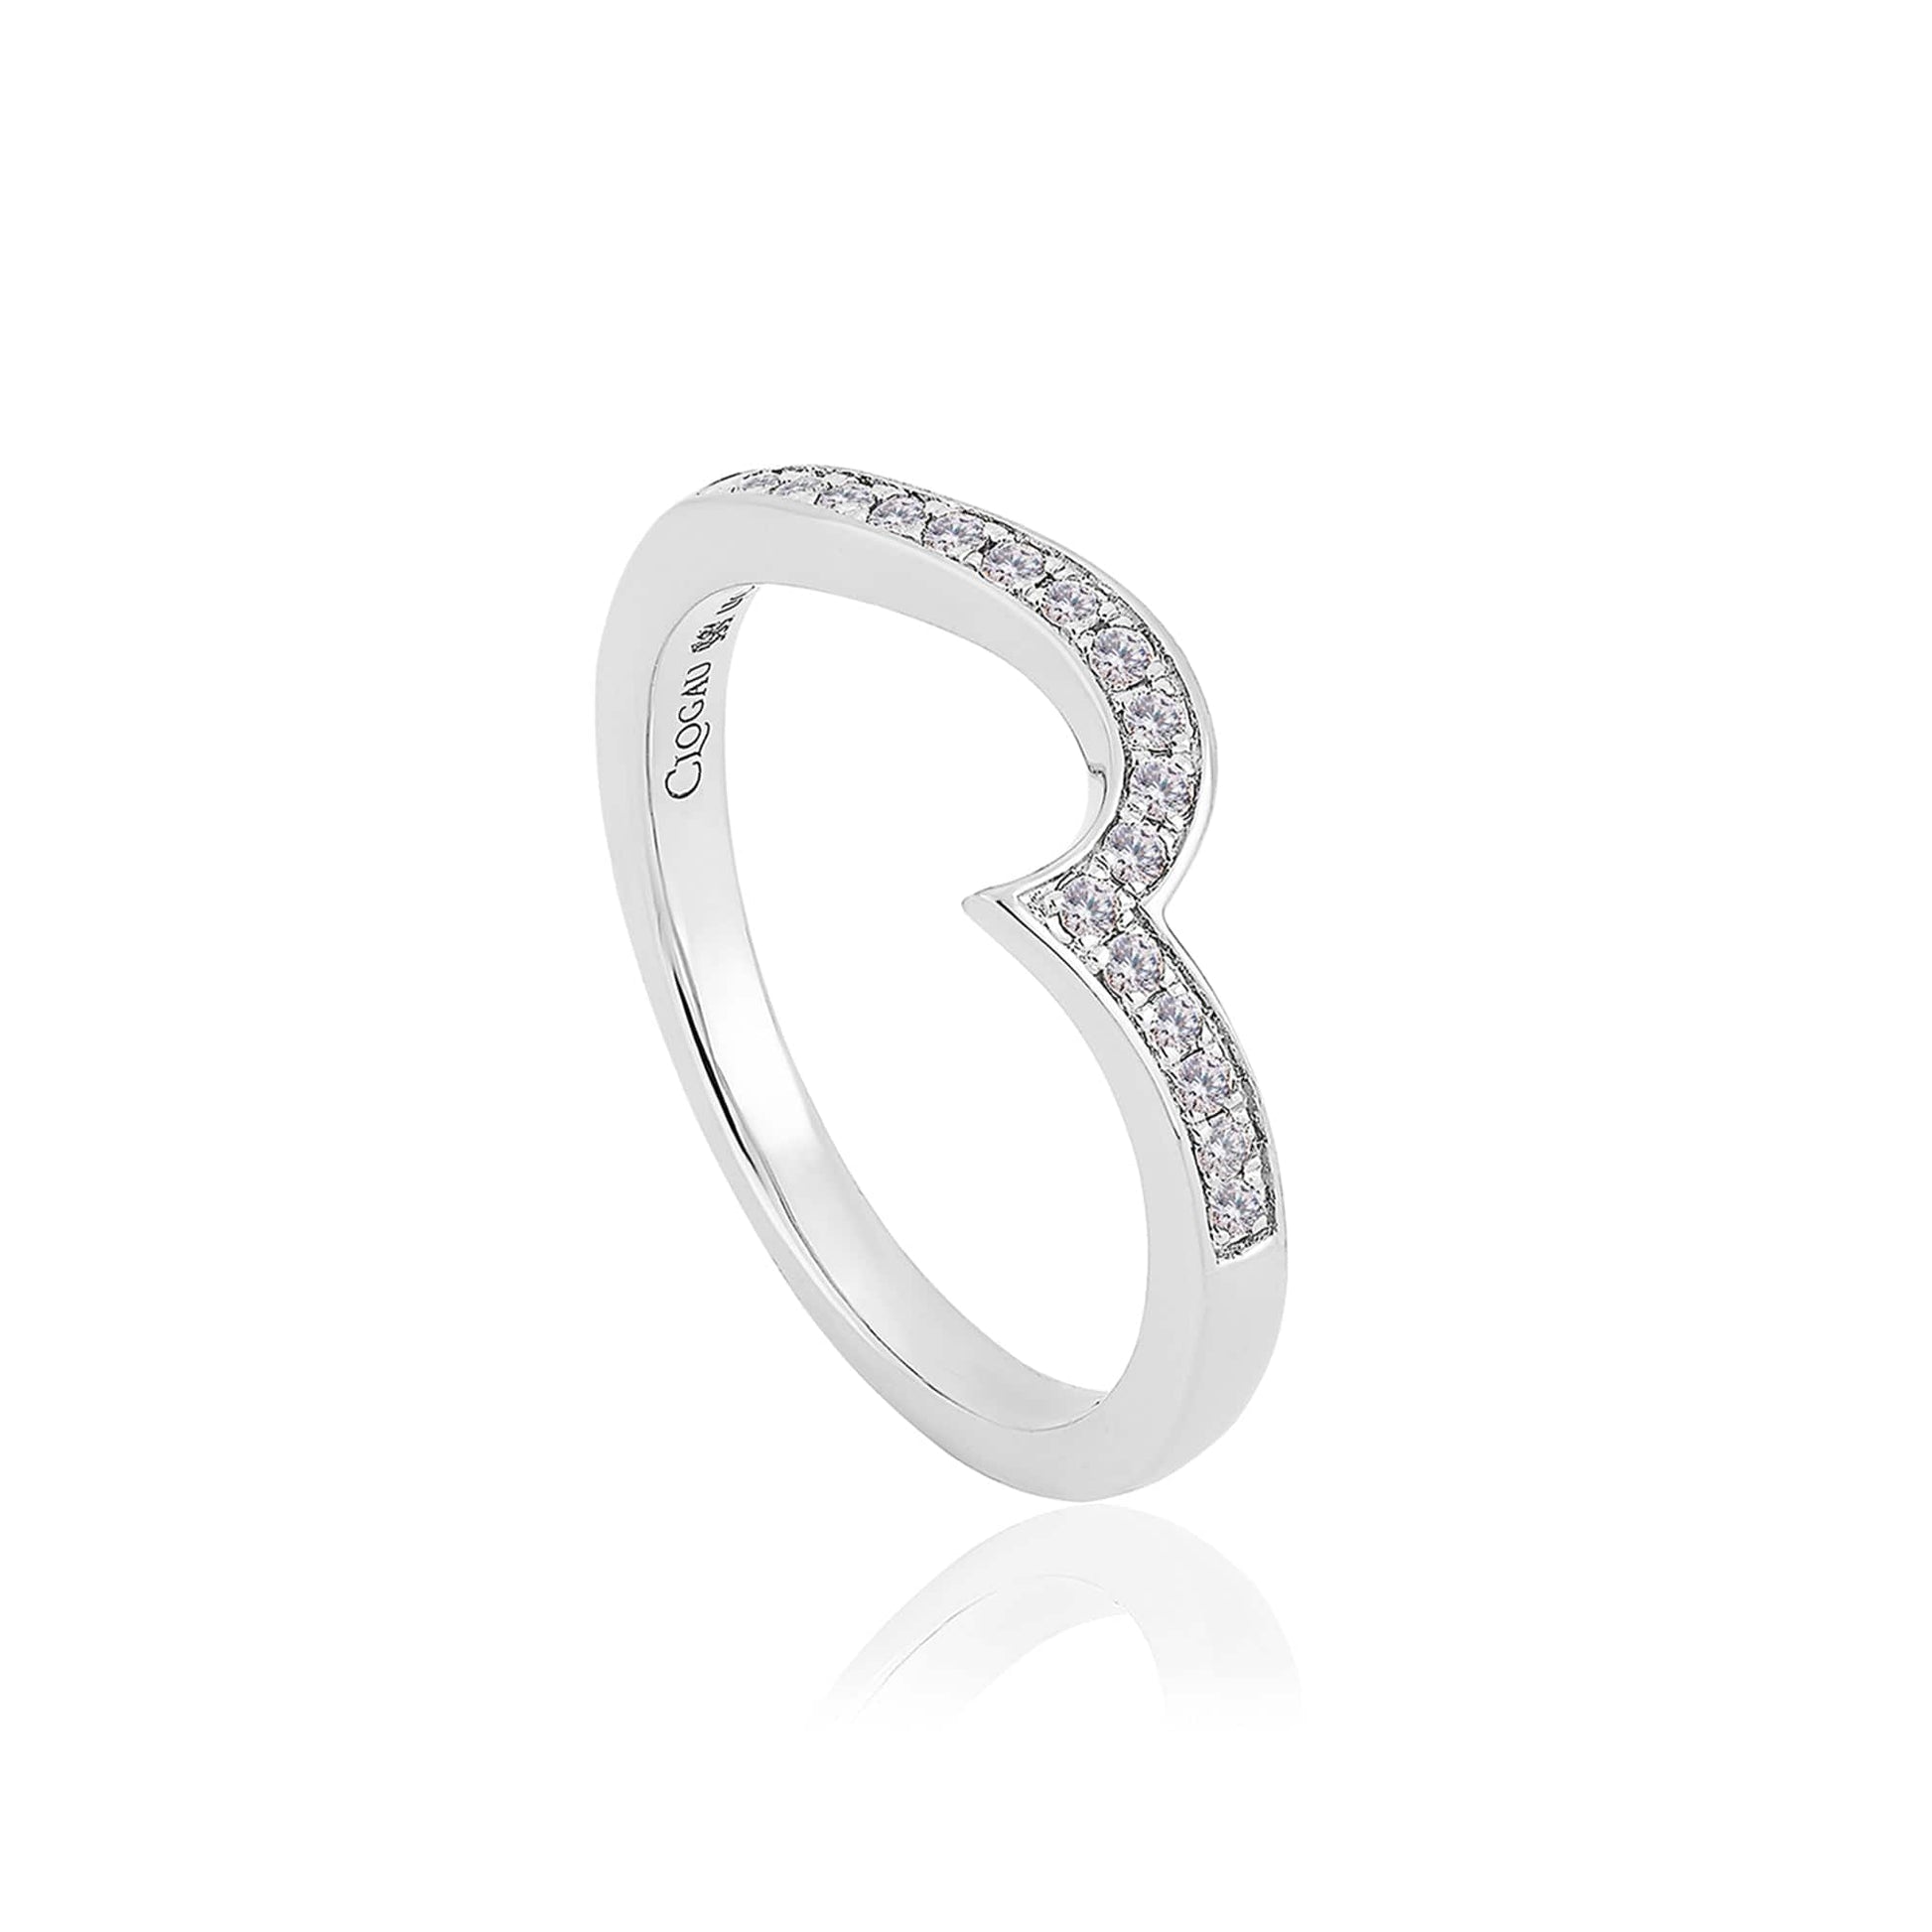 9ct White Gold True Romance Wedding Ring